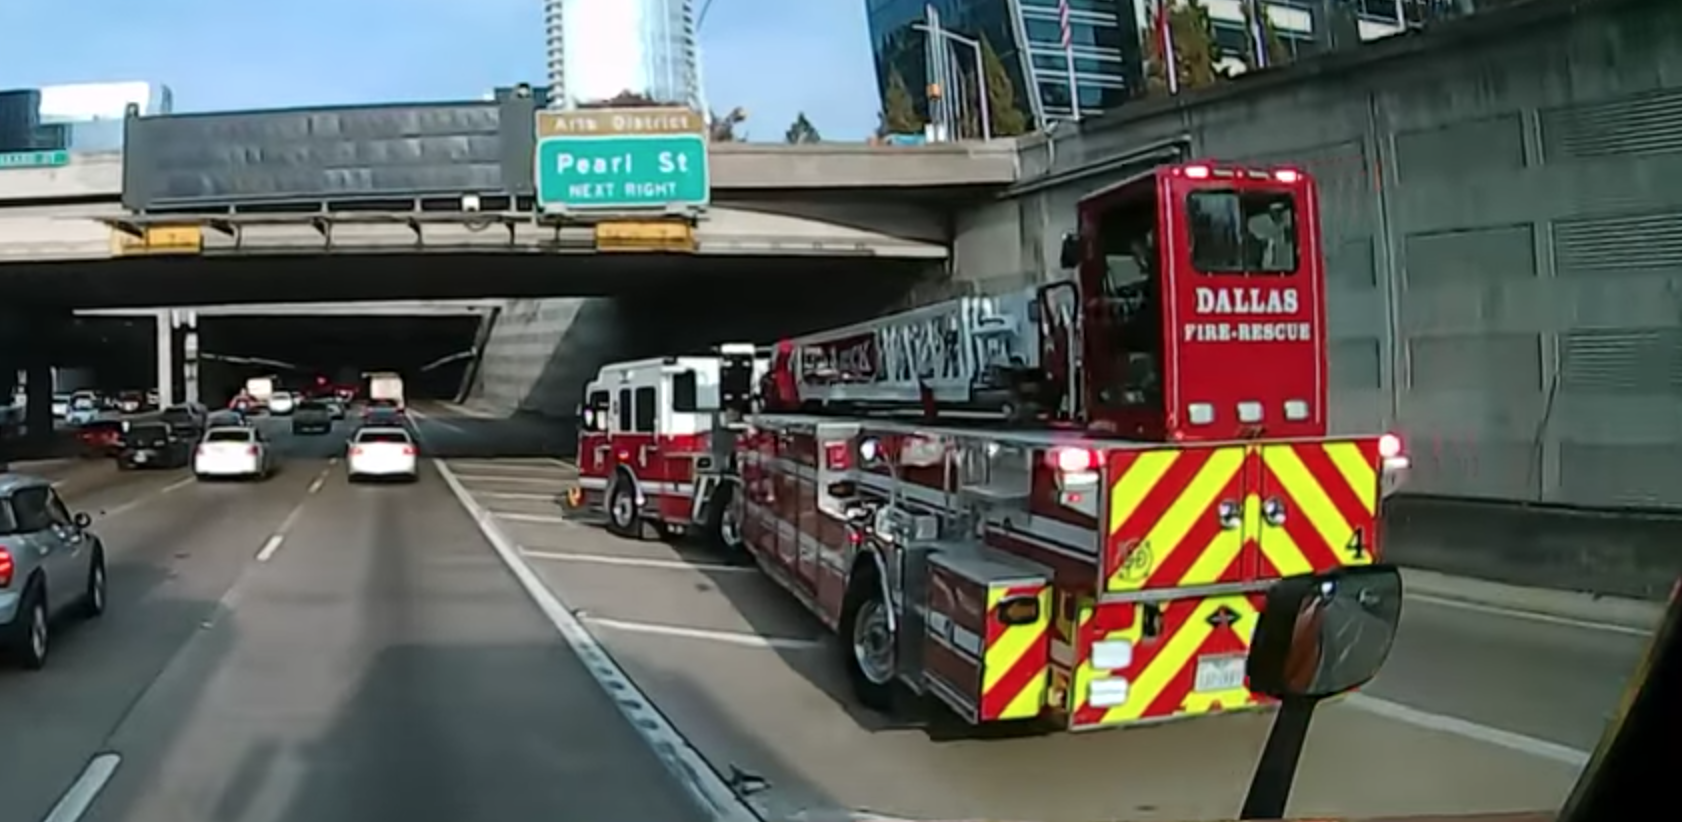 Dash Cam footage of Dallas Fire tiller drifting in traffic